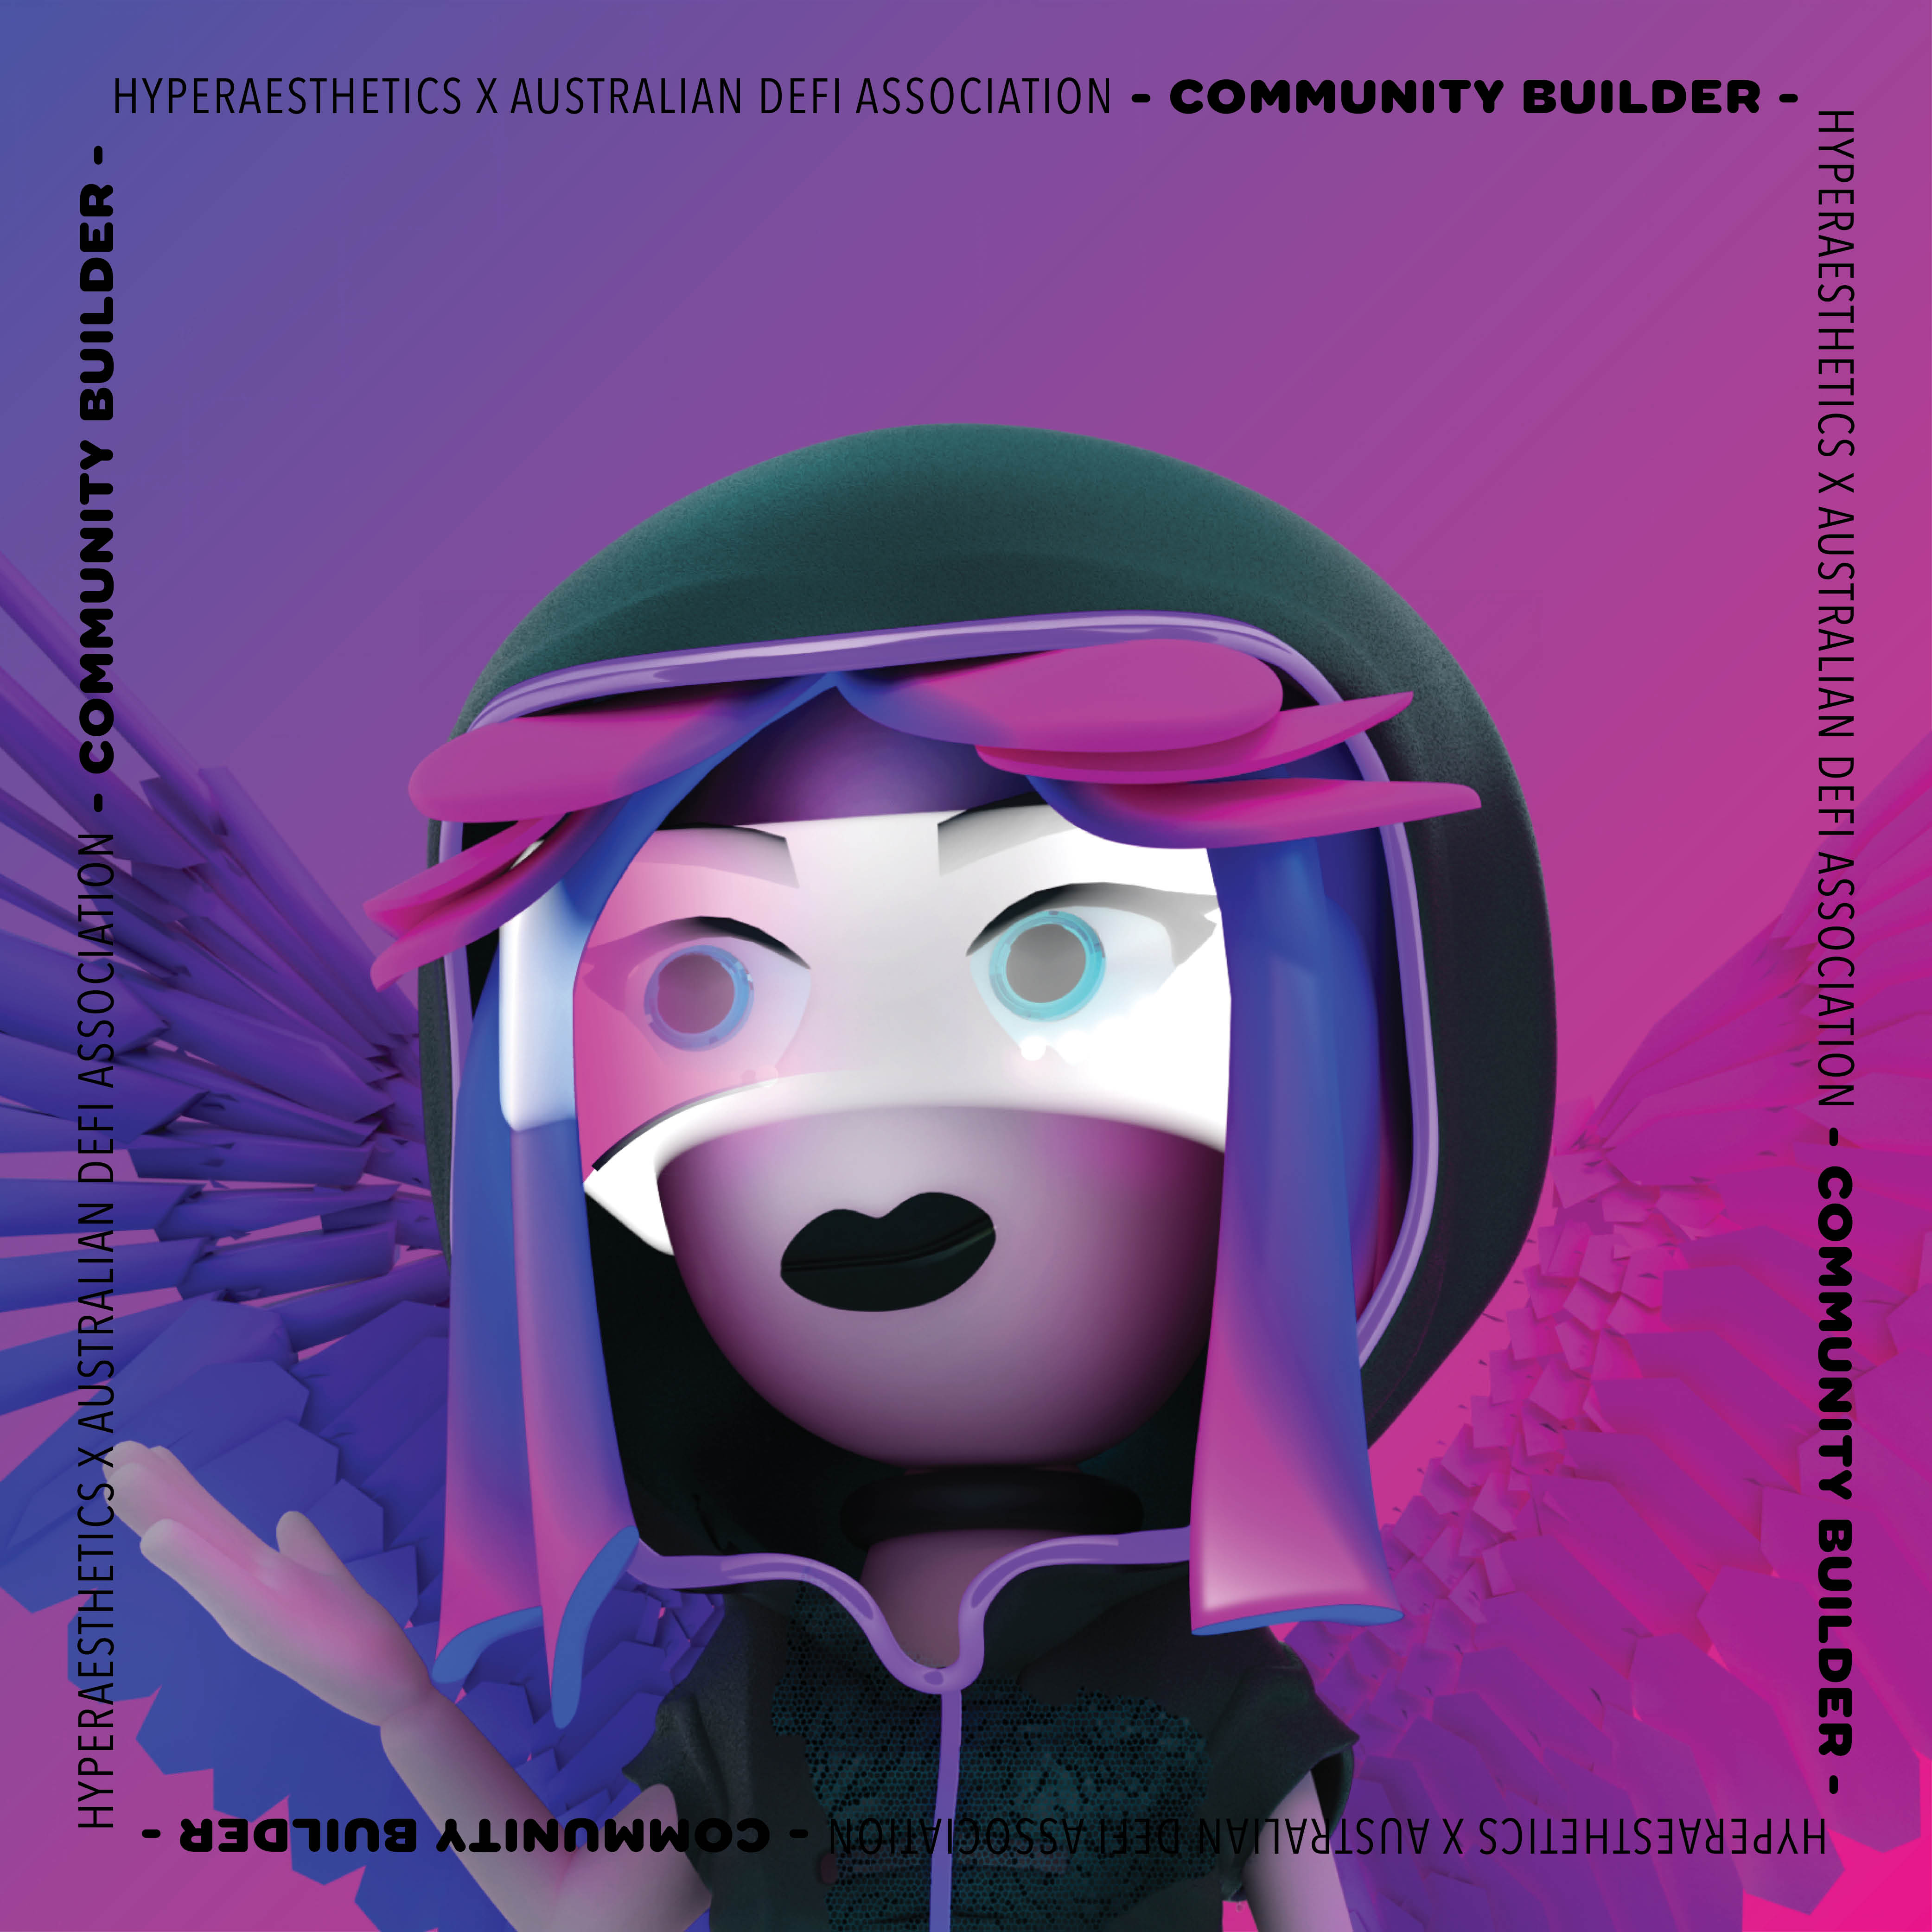 The Community Builder